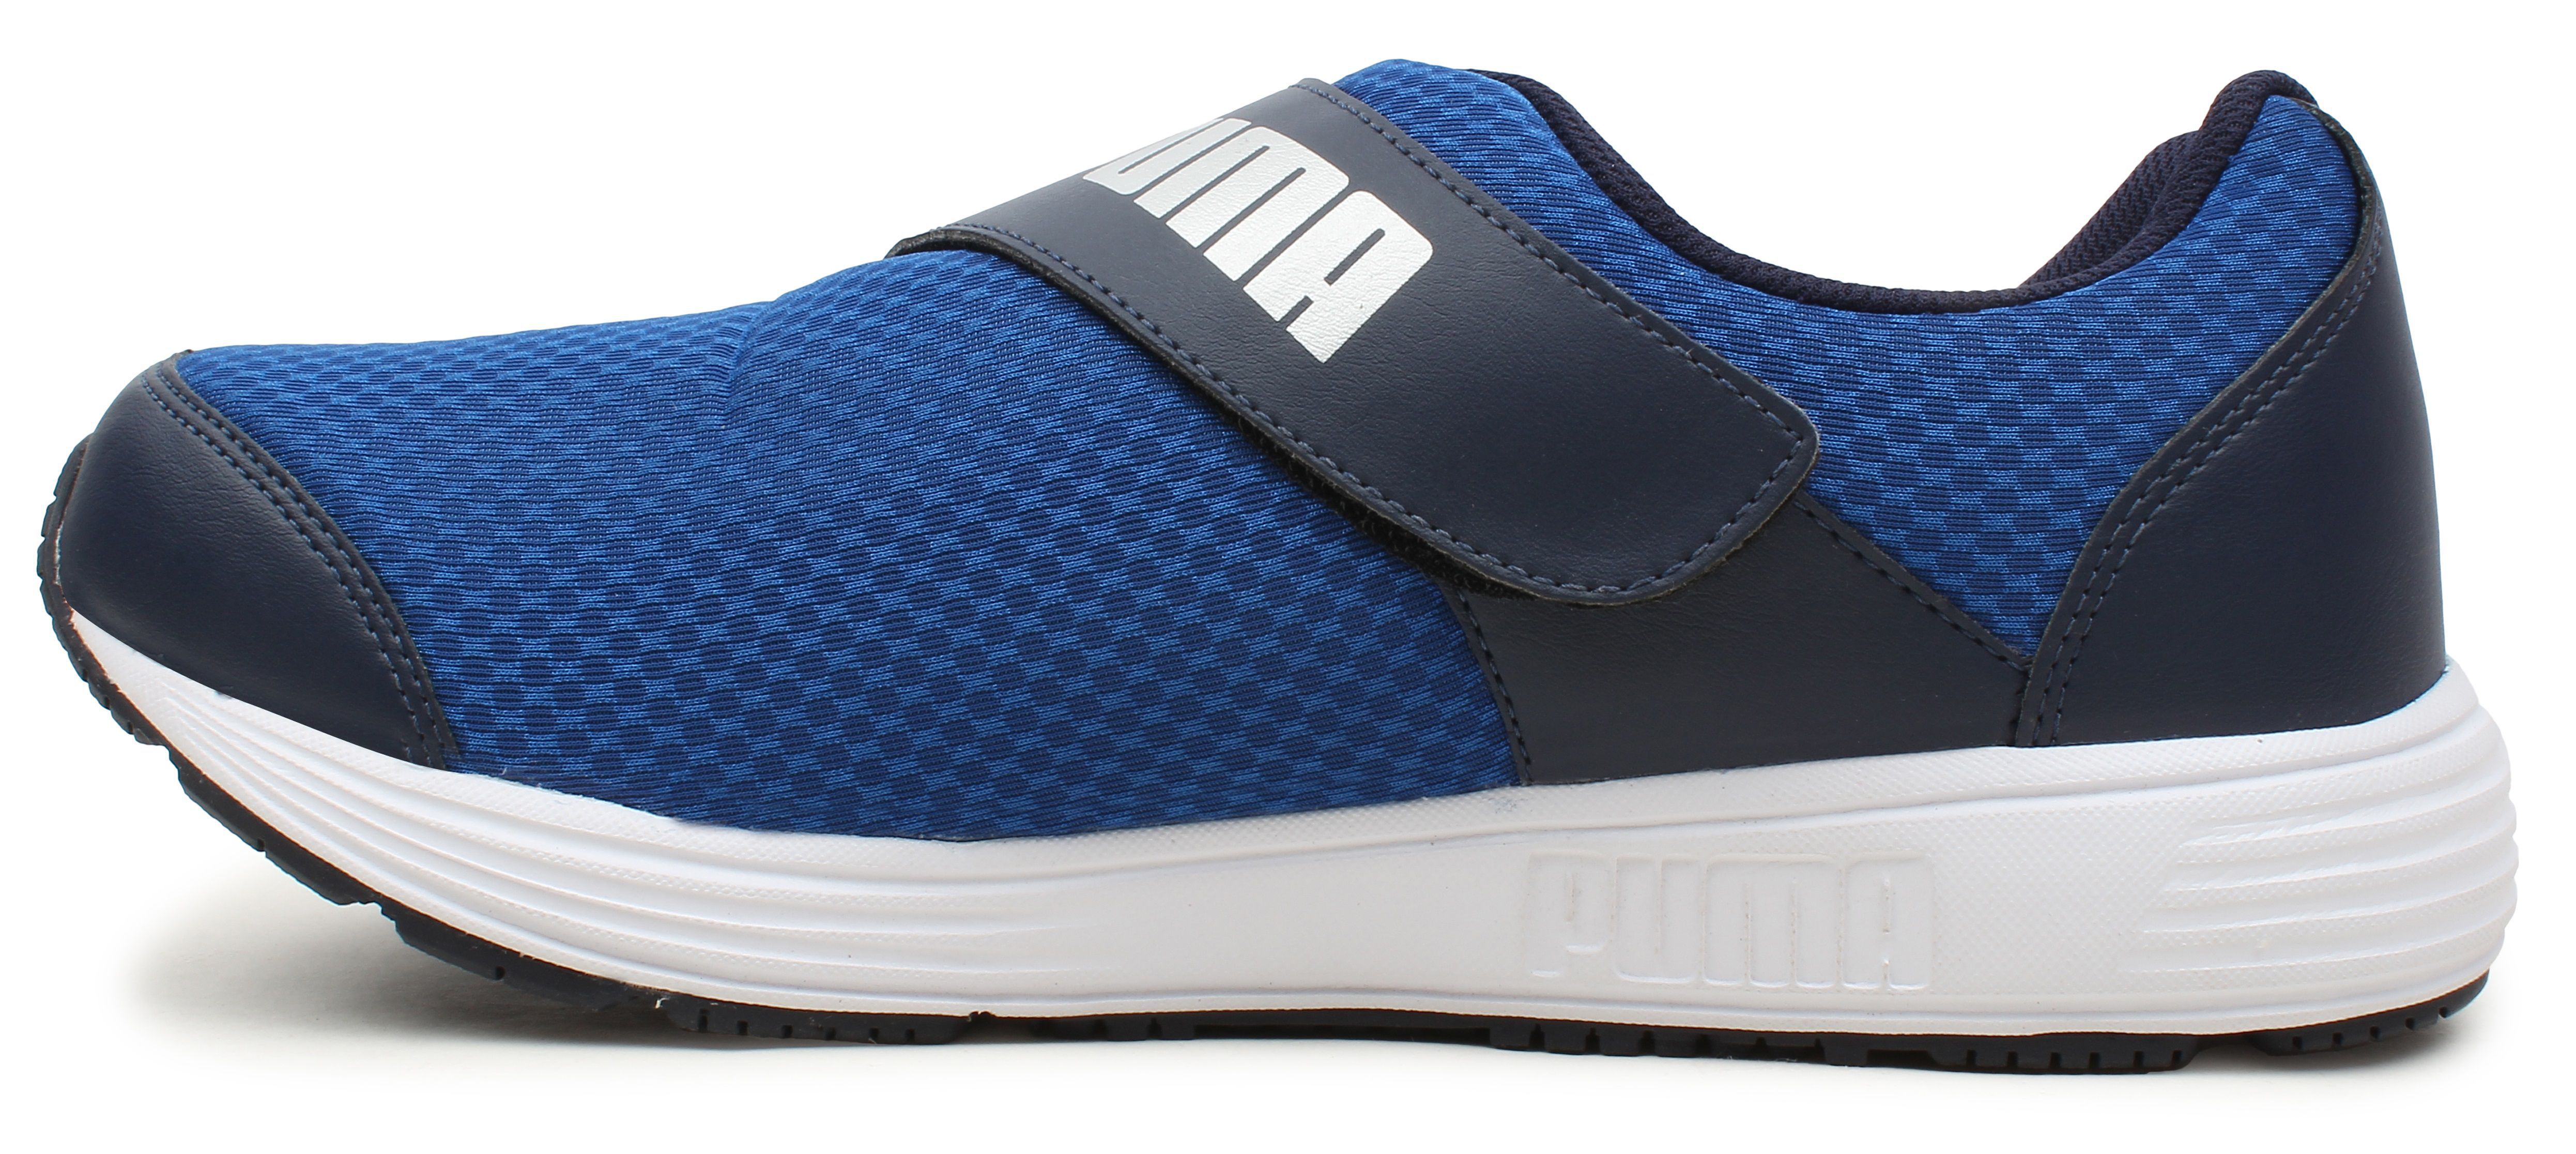 Puma Reef Slip-On IDP Blue Running Shoes - Buy Puma Reef Slip-On IDP ...